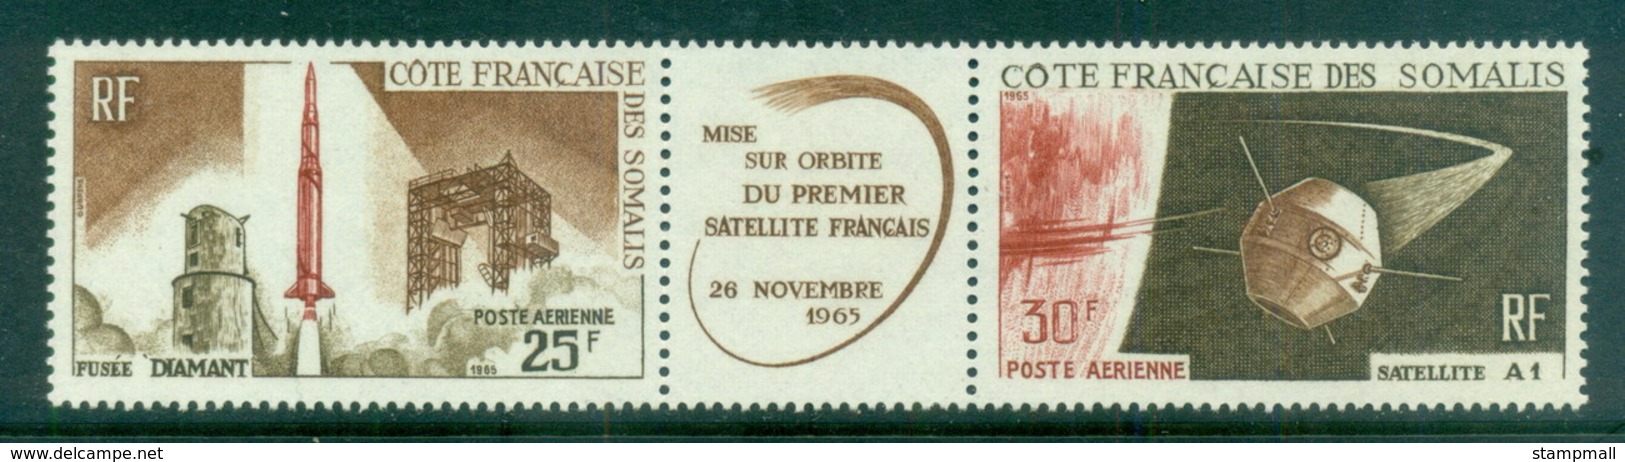 Somali Coast 1966 Space Satellite A 1 Pr + Label MUH - Somalia (1960-...)